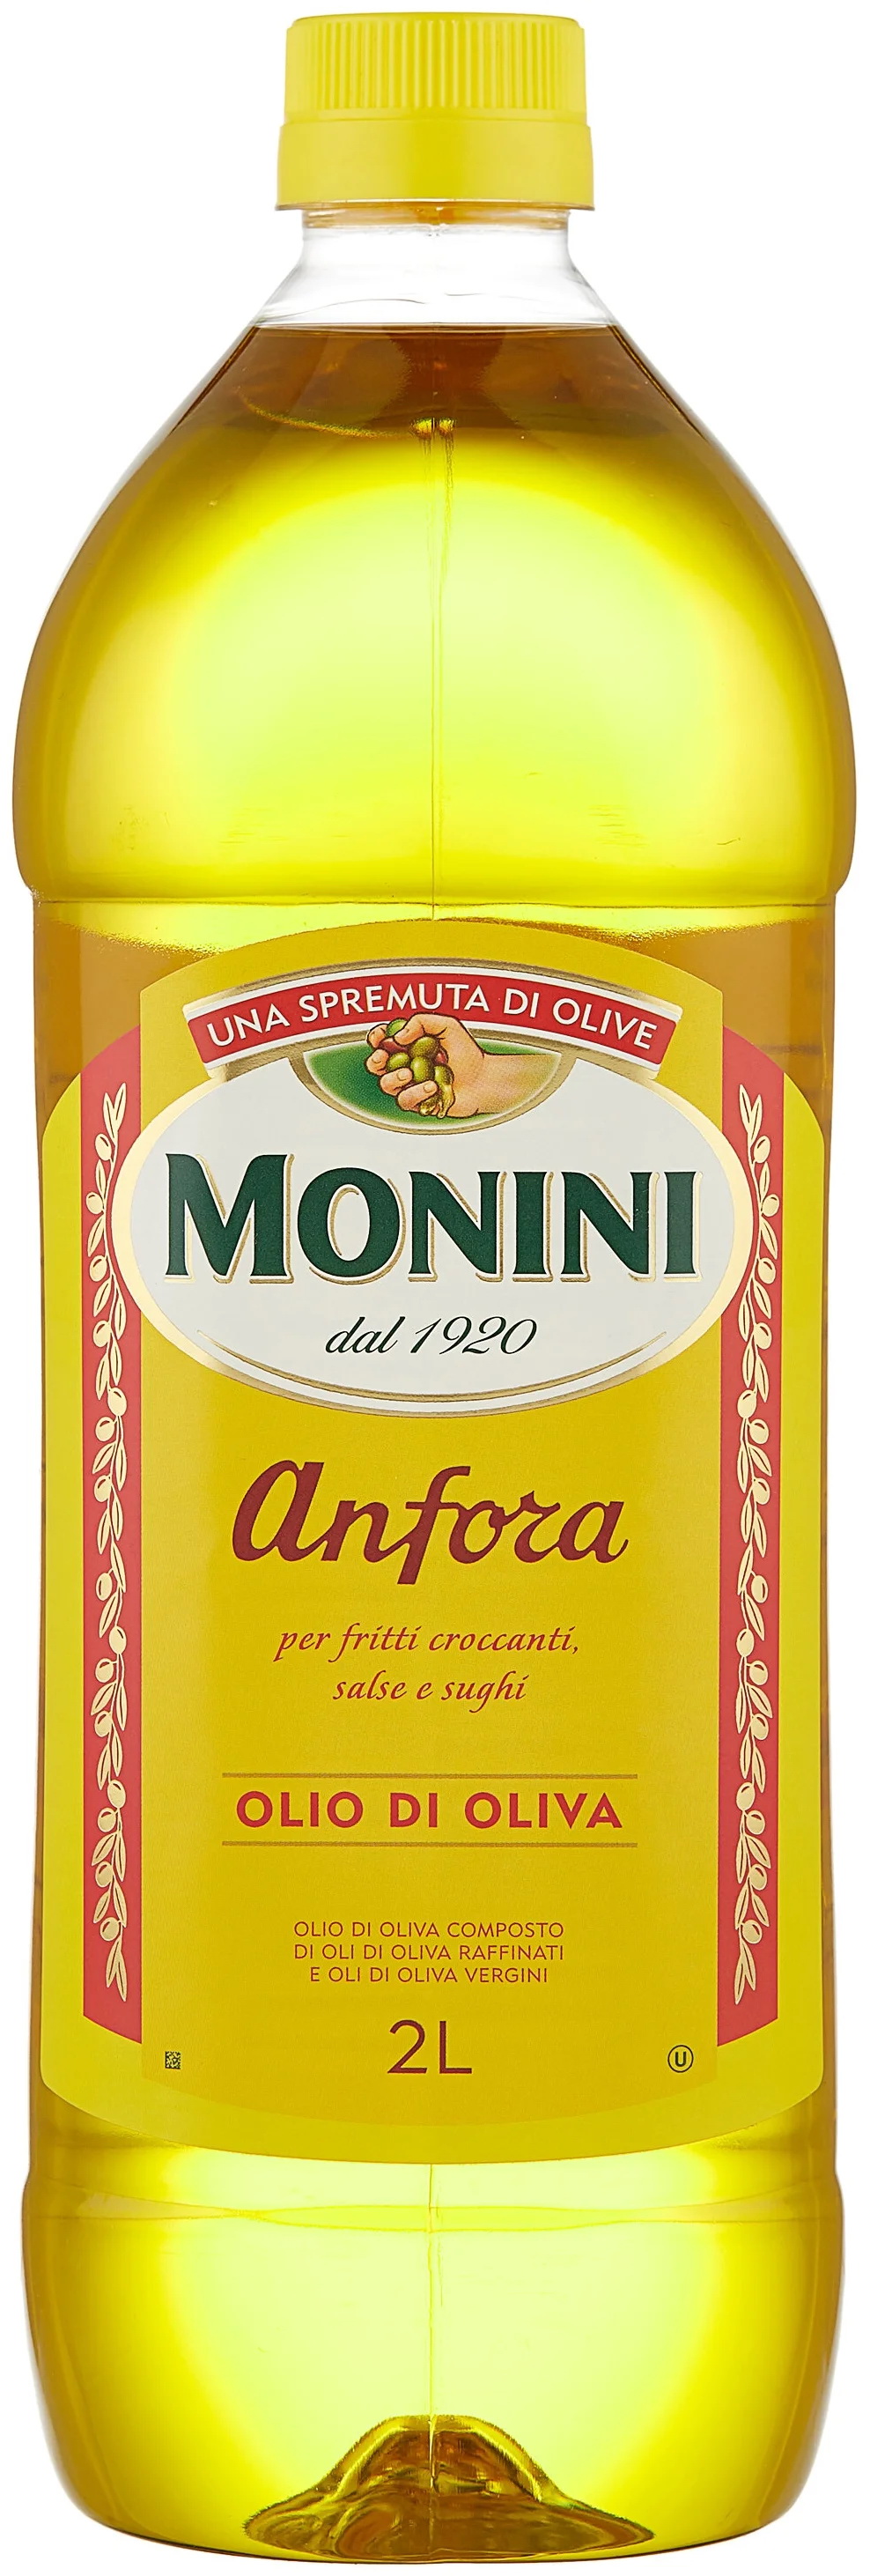 Масло оливковое monini купить. Monini Anfora оливковое масло. Monini Anfora 3 л масло. Масло оливковое Monini фильтрованное, 2 л. Масло Monini Anfora оливковое, 0,5л.